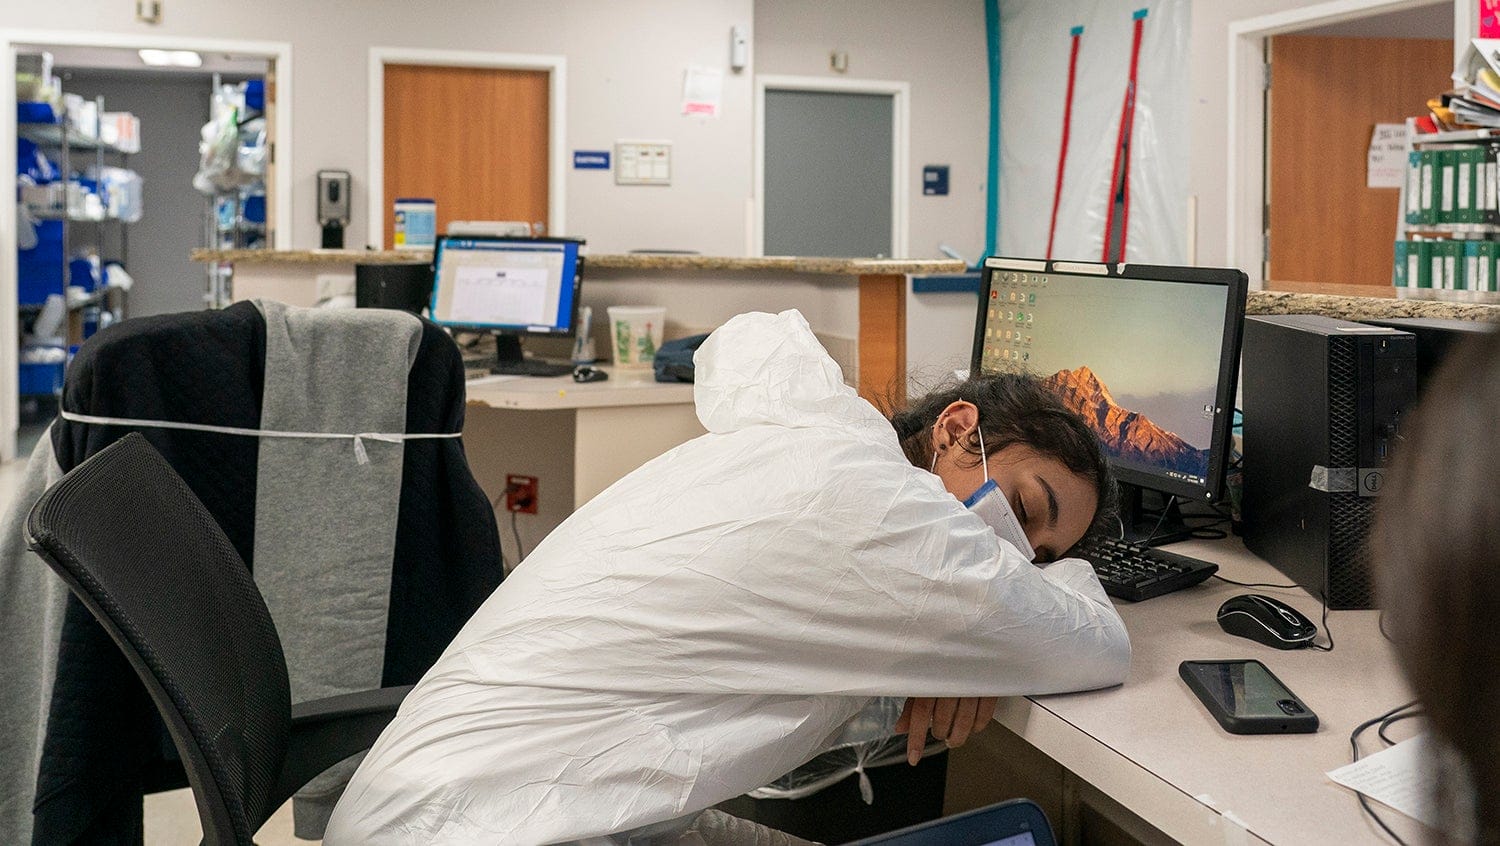 medical resident falls asleep at nurses station wearing PPE